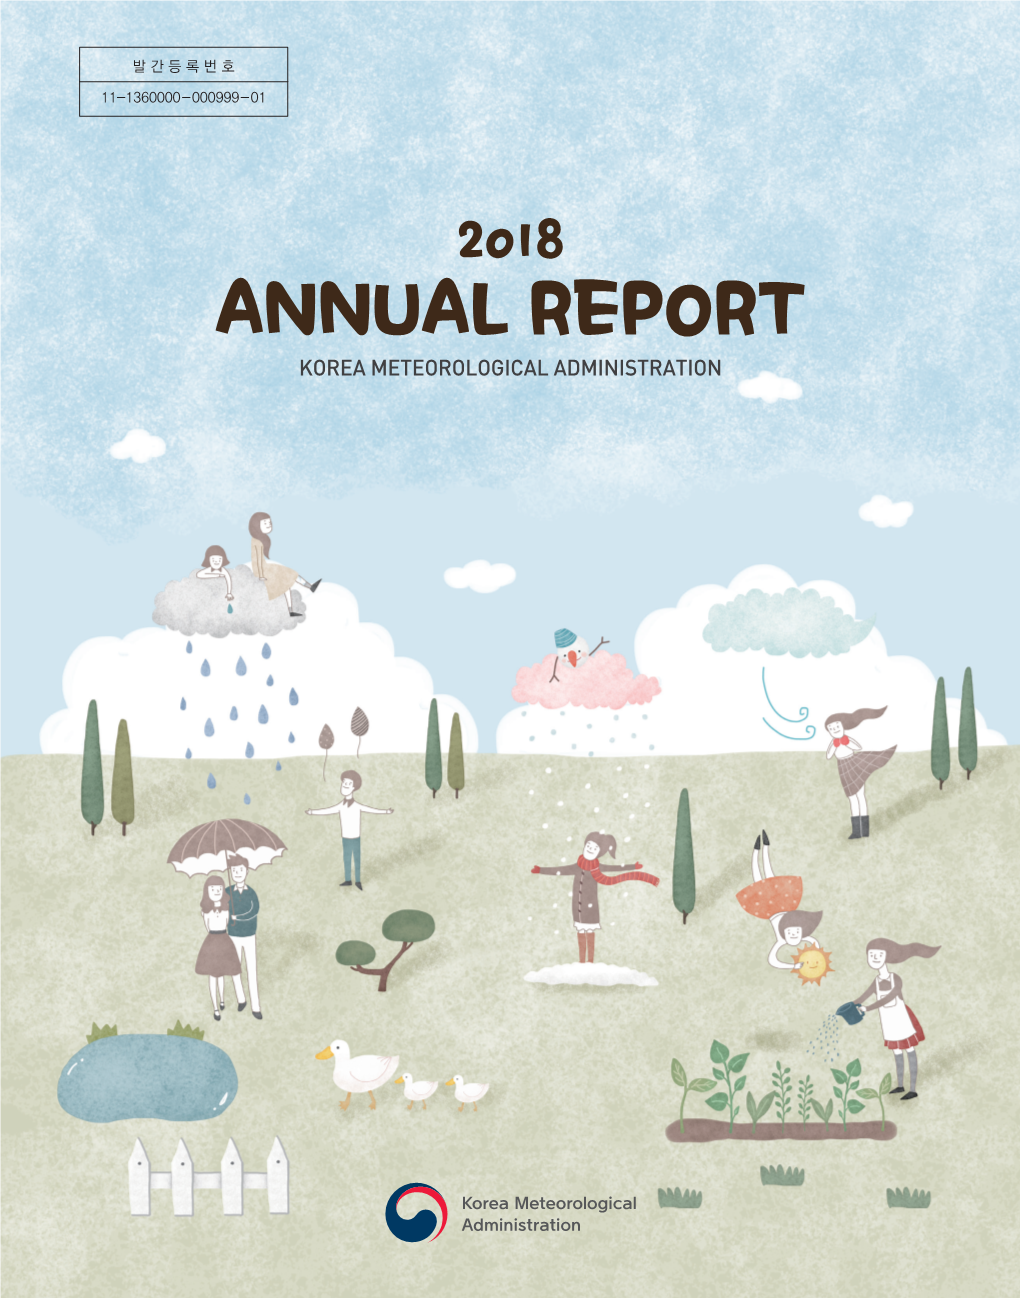 ANNUAL REPORT KOREA METEOROLOGICAL ADMINISTRATION 2018 ANNUAL REPORT KOREA METEOROLOGICAL ADMINISTRATION Contents